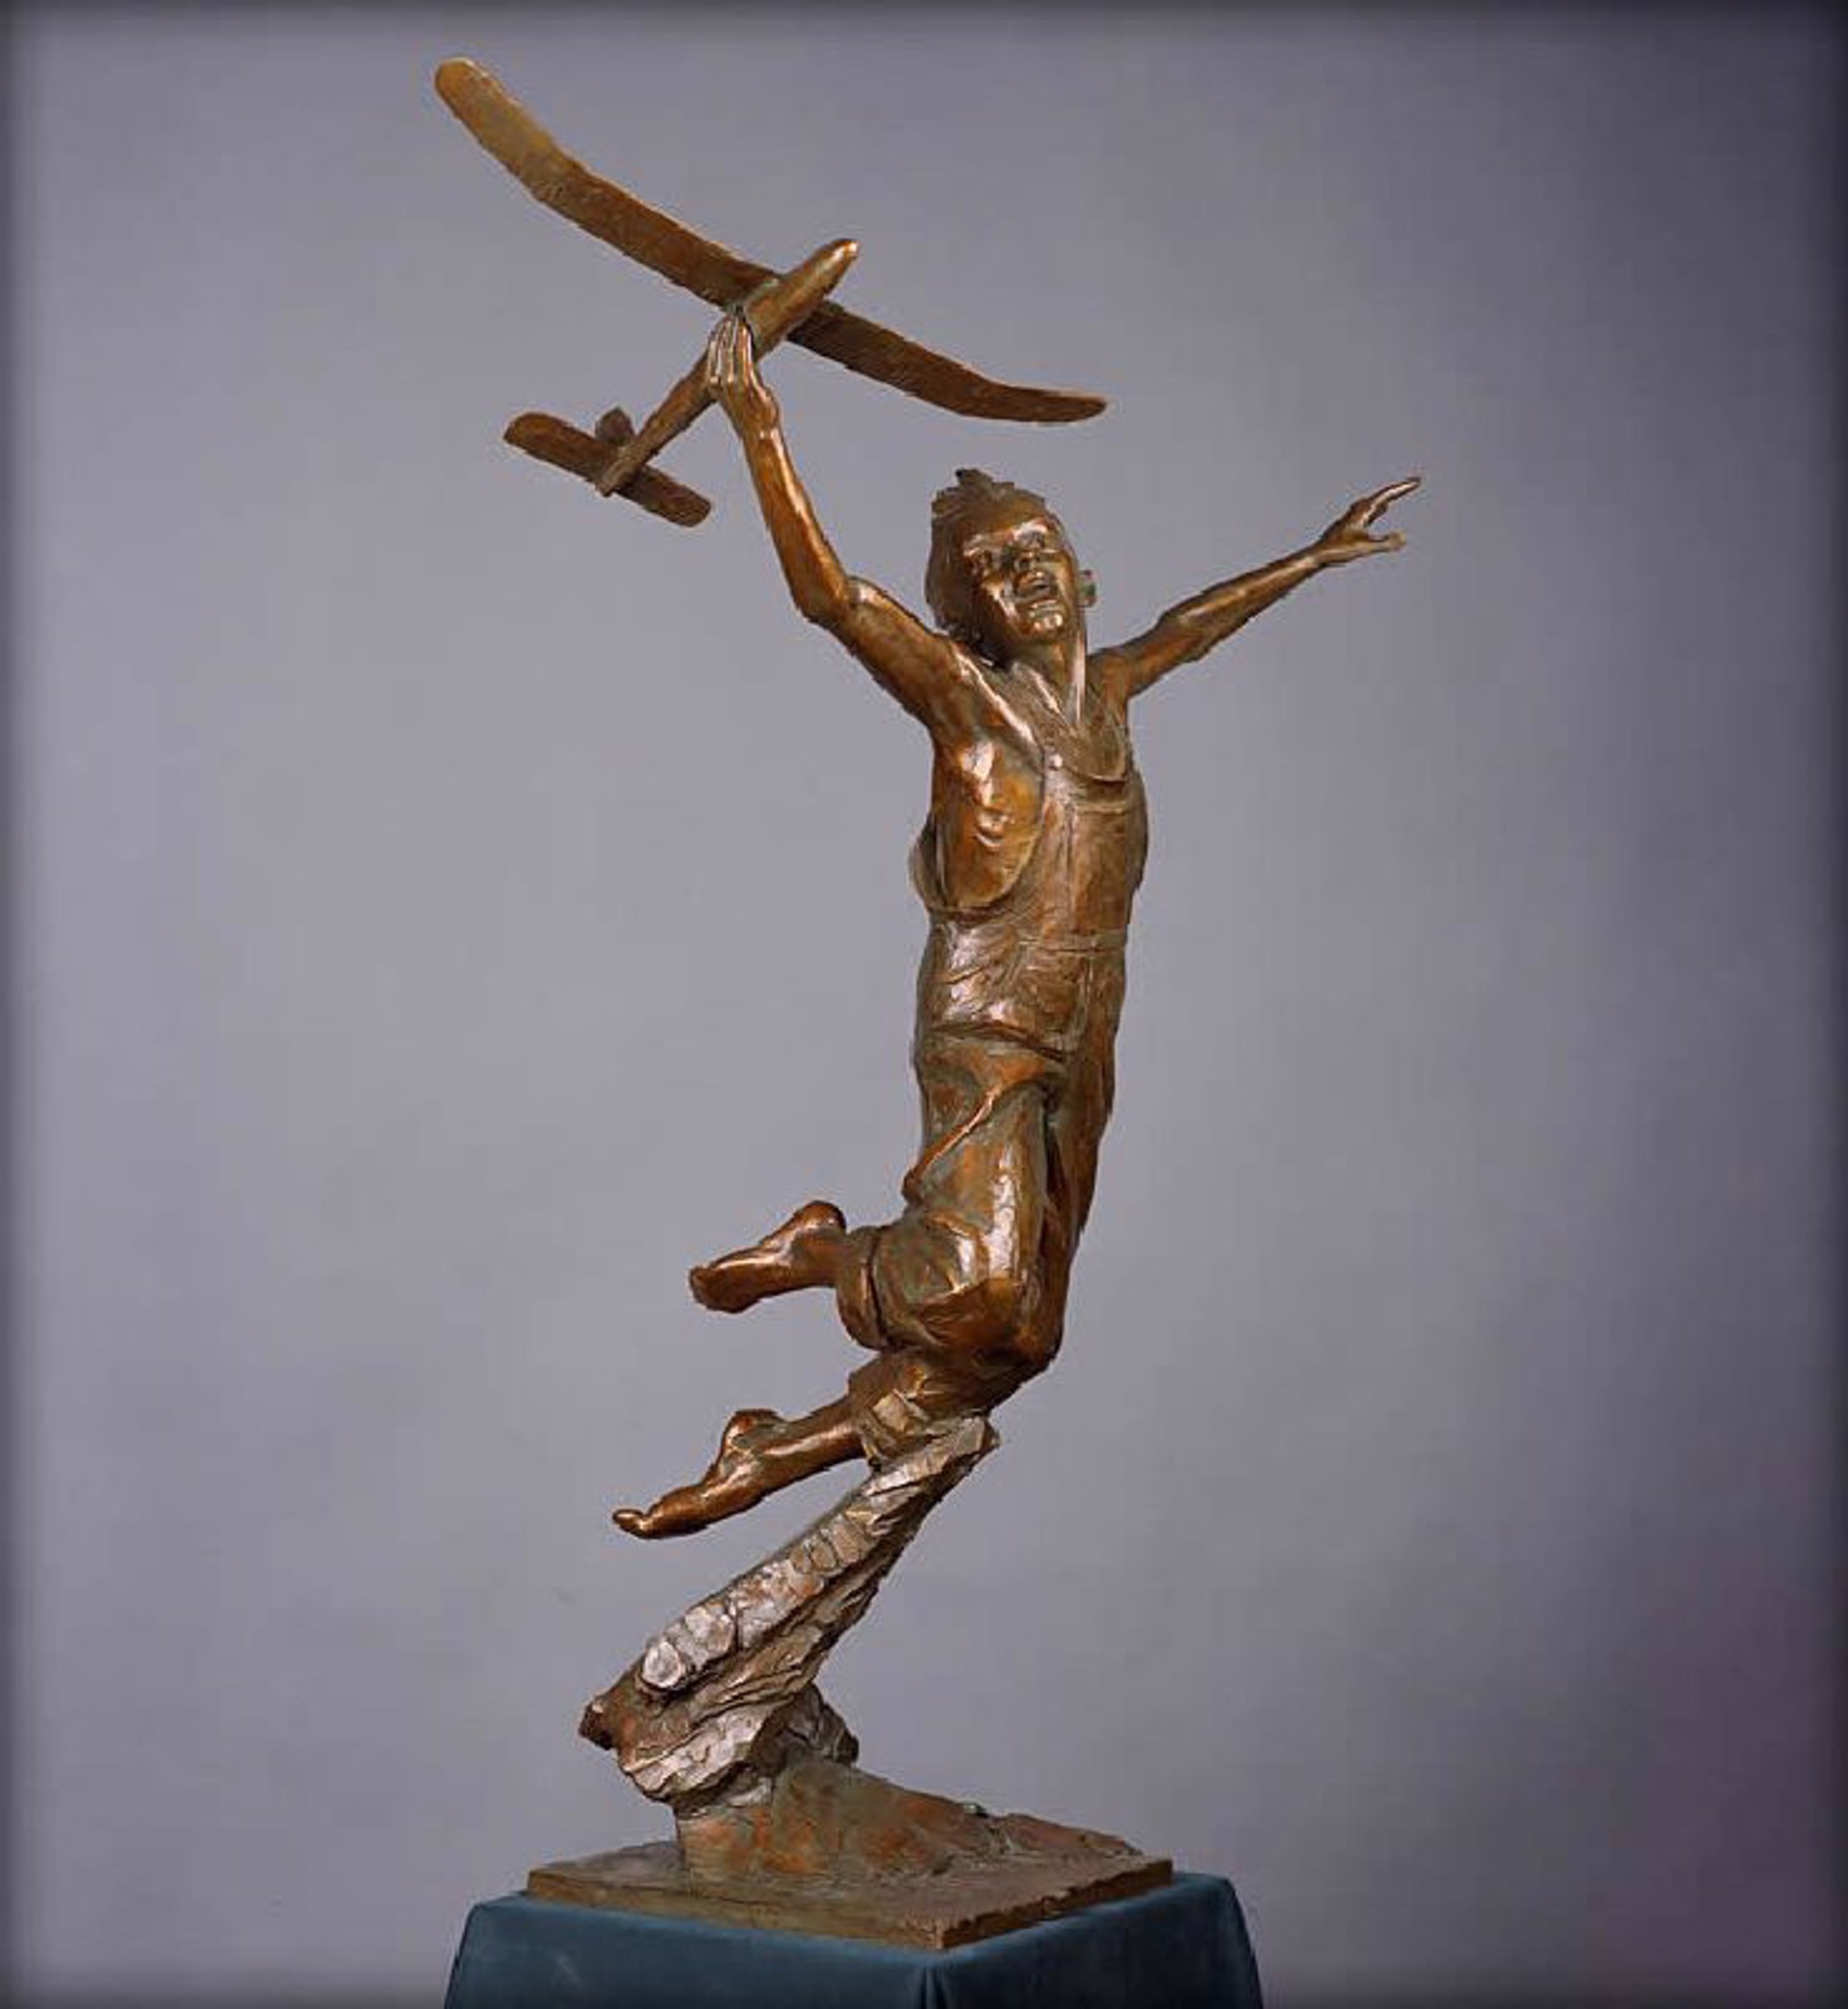 Wings Monumental 112" #3/40 by Gary Lee Price (sculptor)